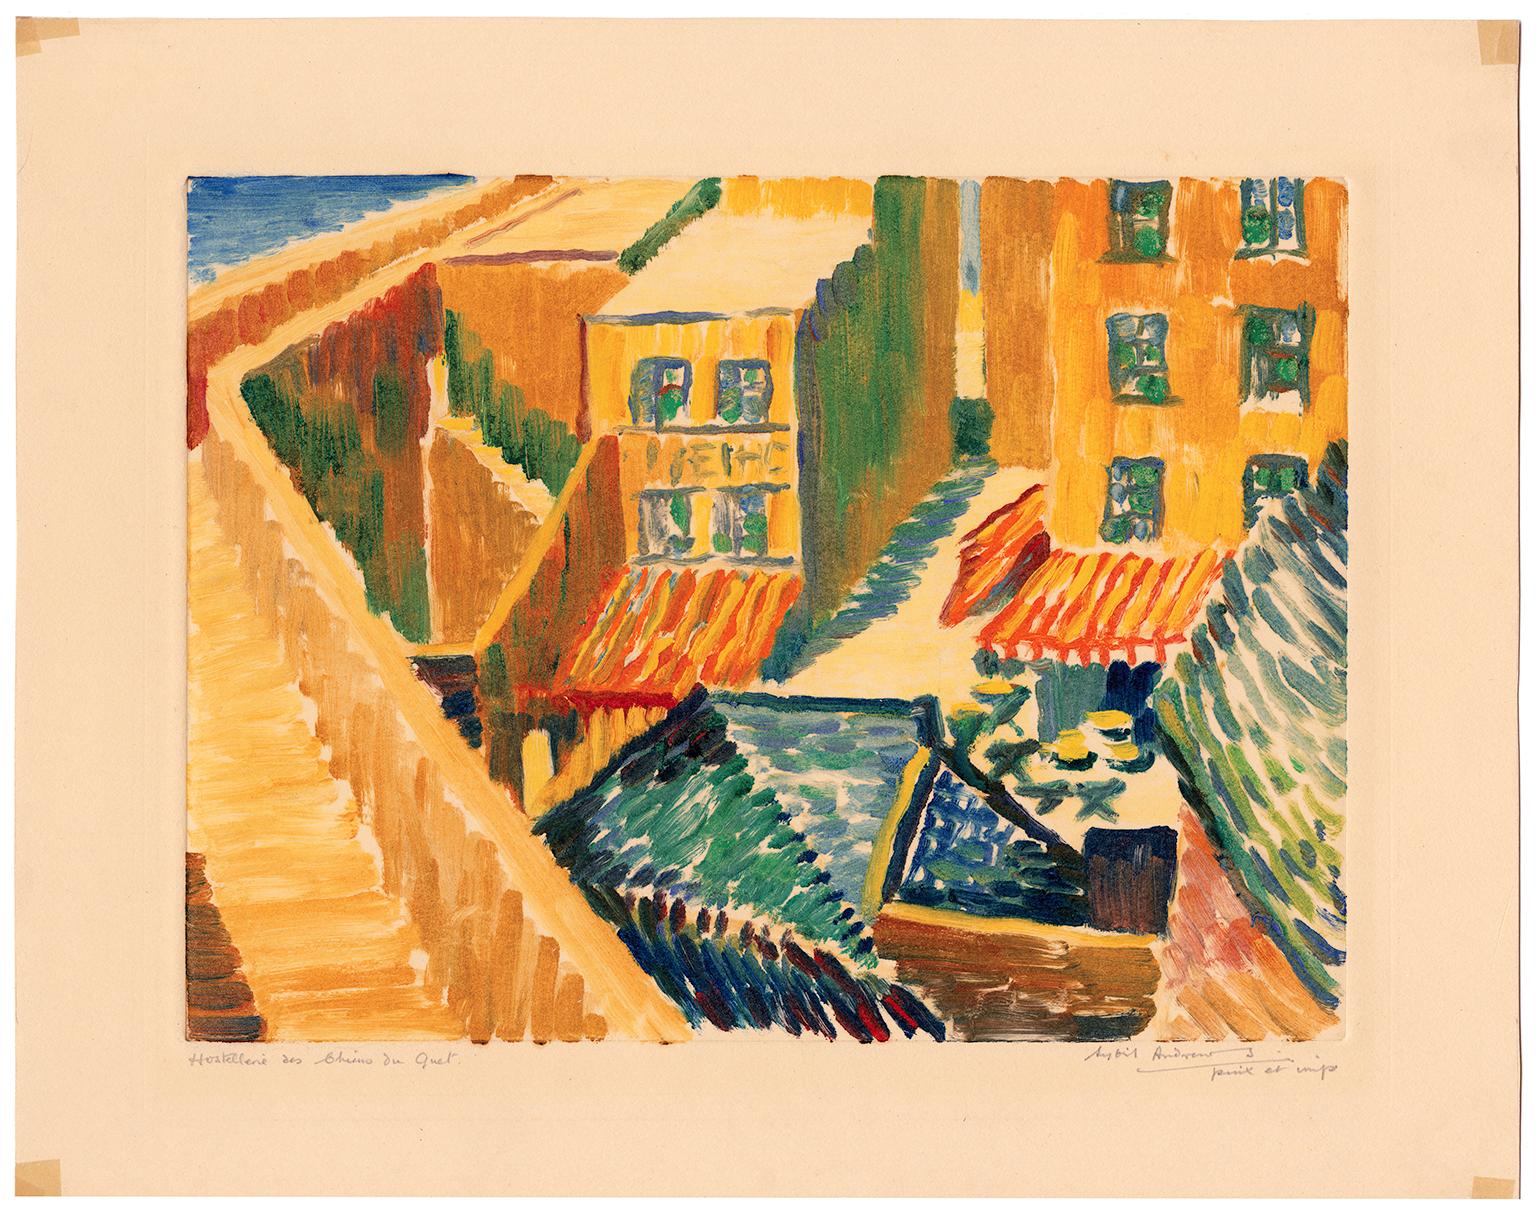 'Hostellerie des Chiens du Guet' — 1920s British Impressionism - Print by Sybil Andrews